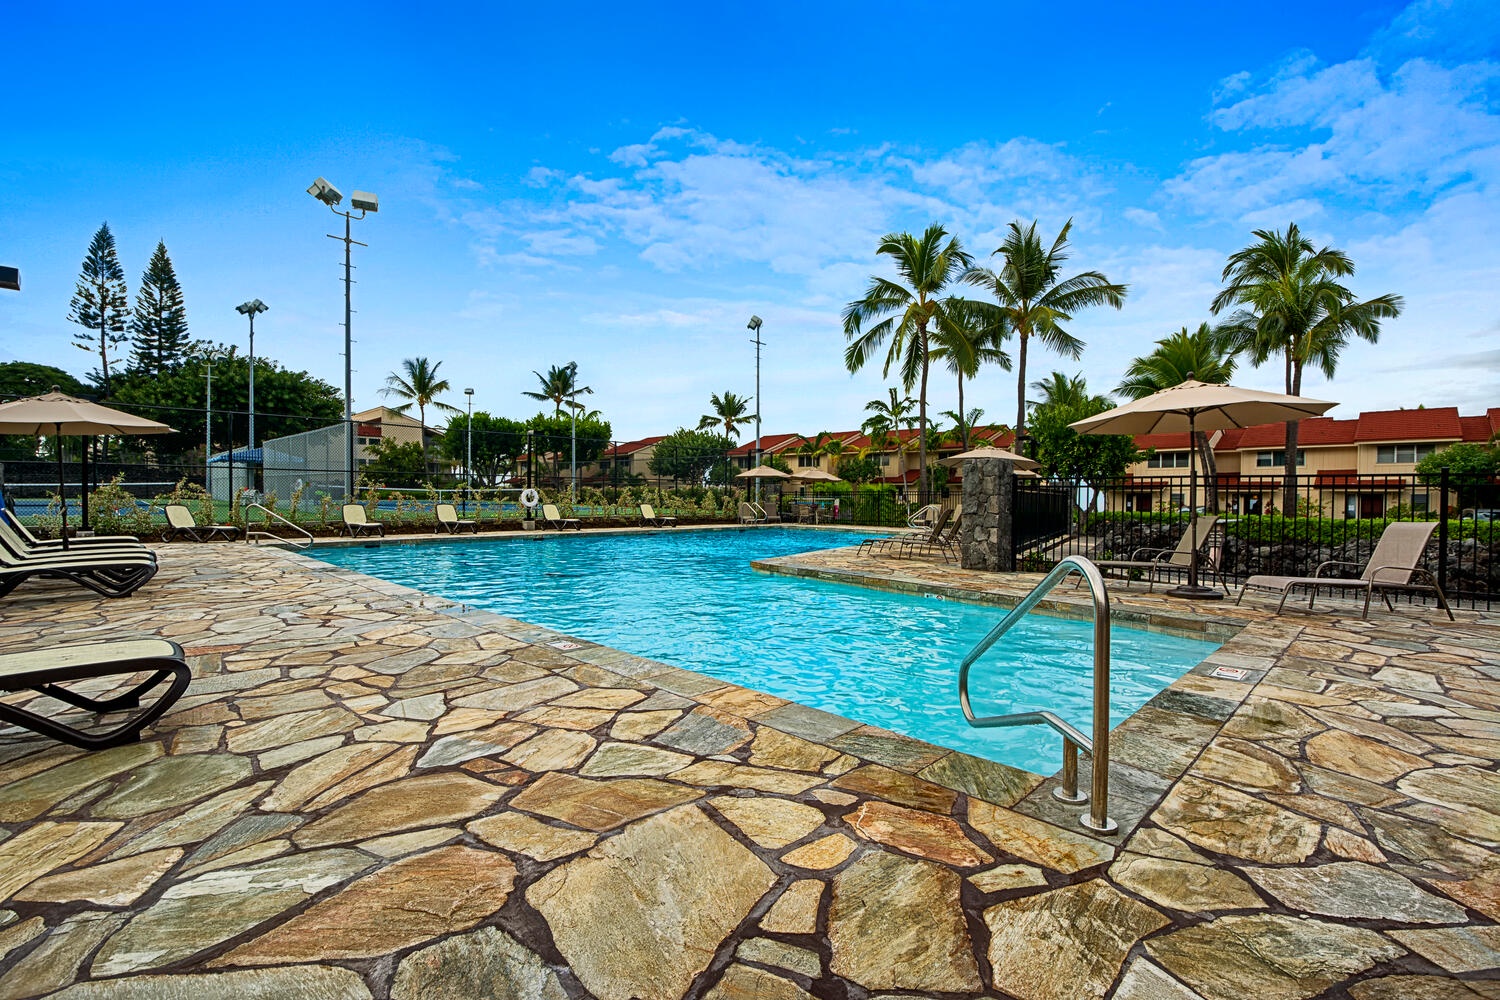 Kailua Kona Vacation Rentals, Keauhou Kona Surf & Racquet 1104 - Take a refreshing dip at the condo pool.